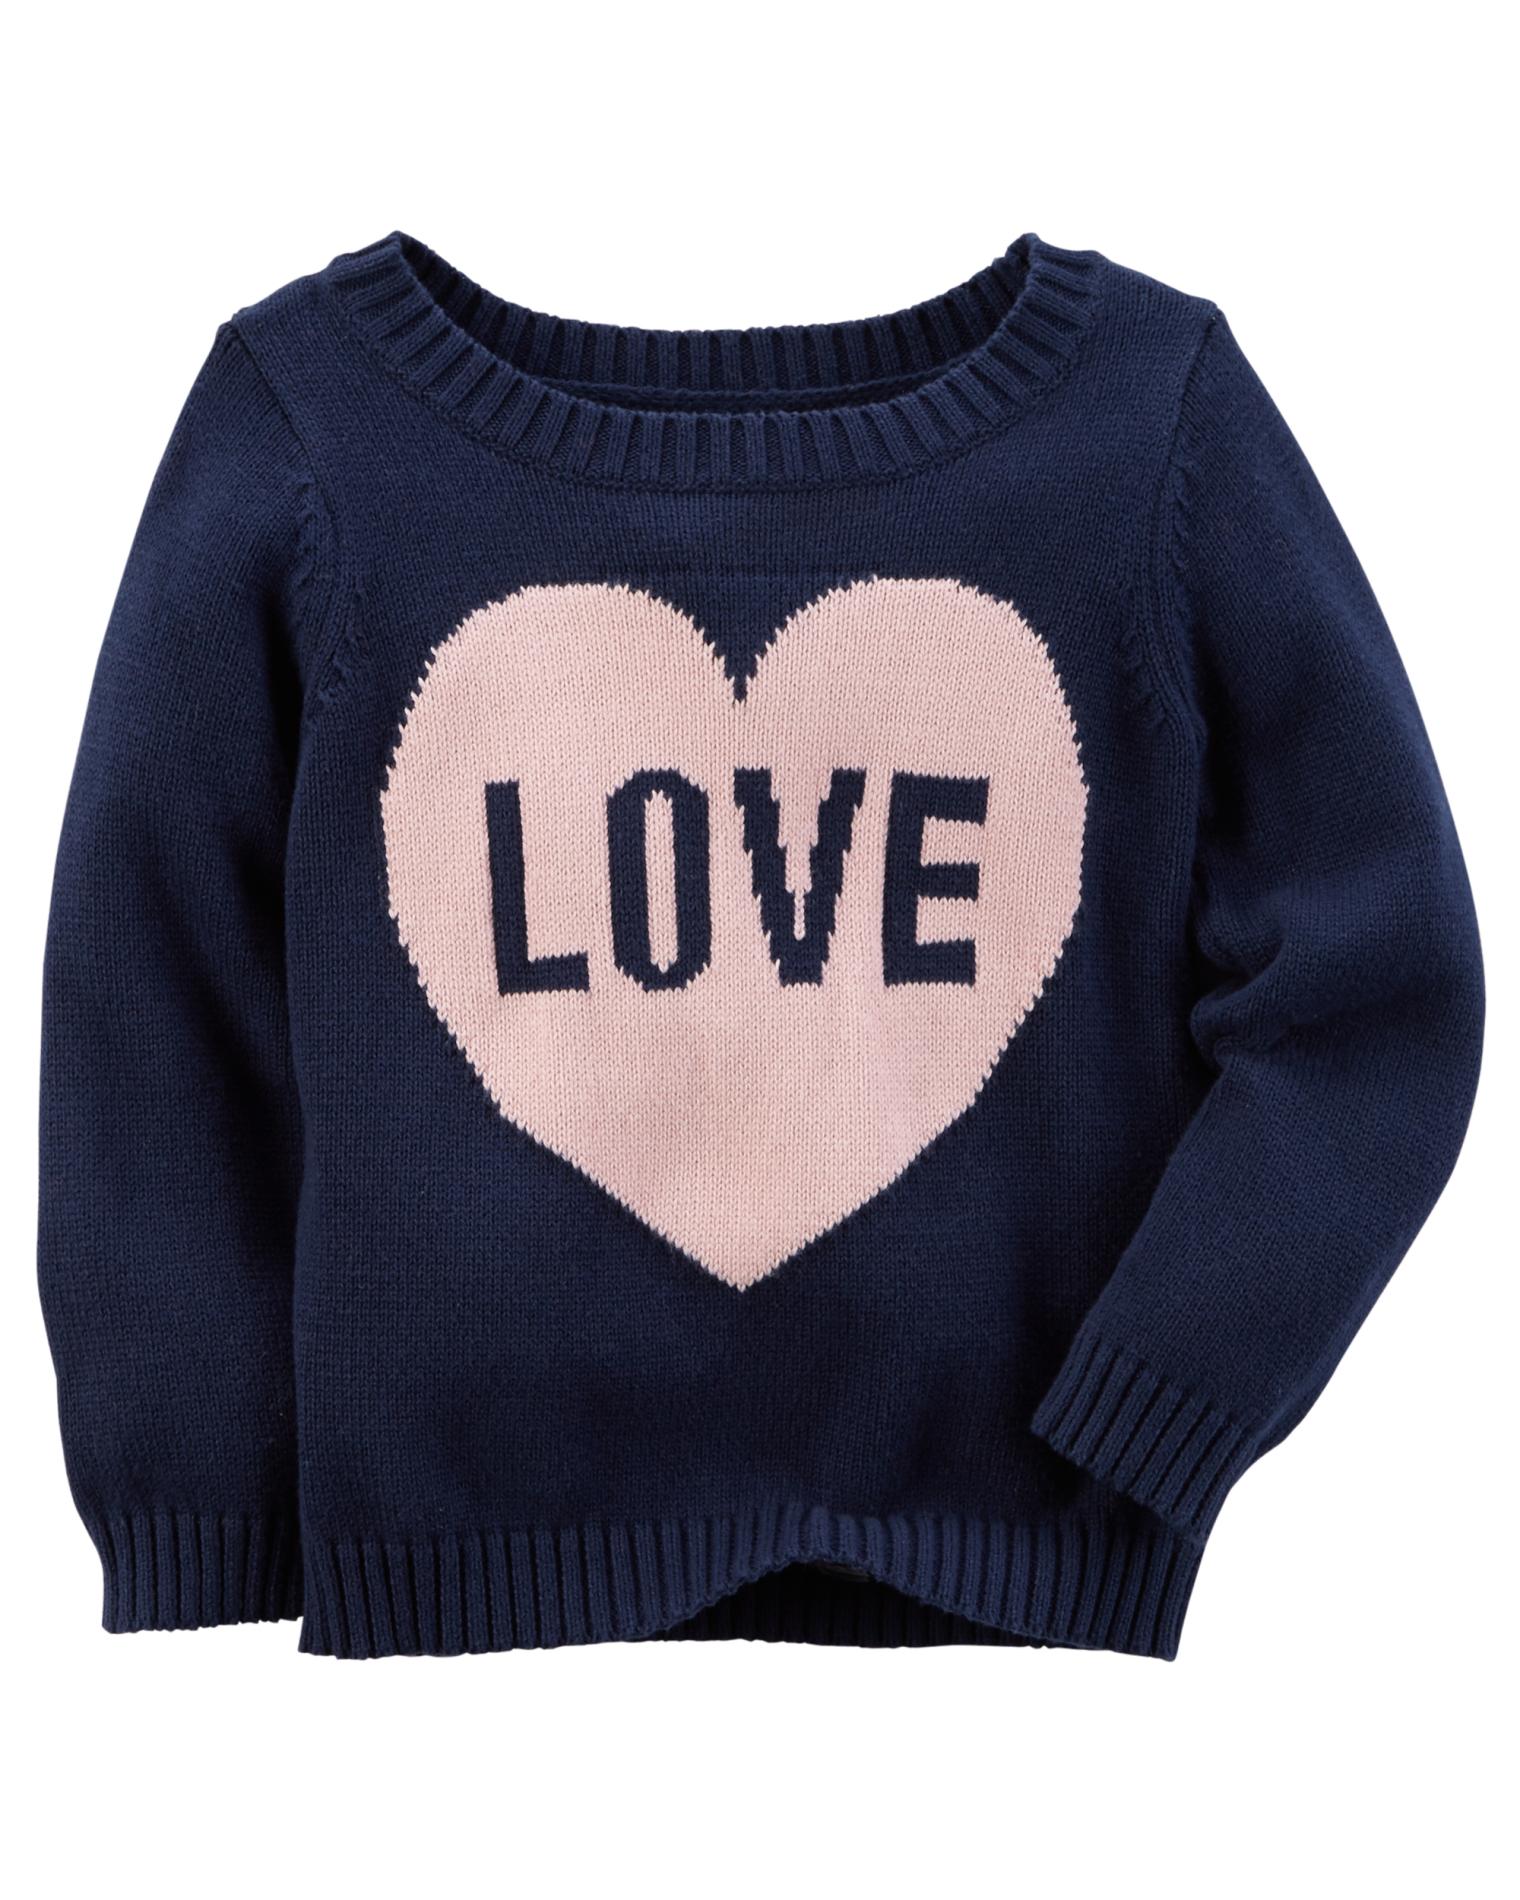 Carter's Toddler Girls' Sweater - Love